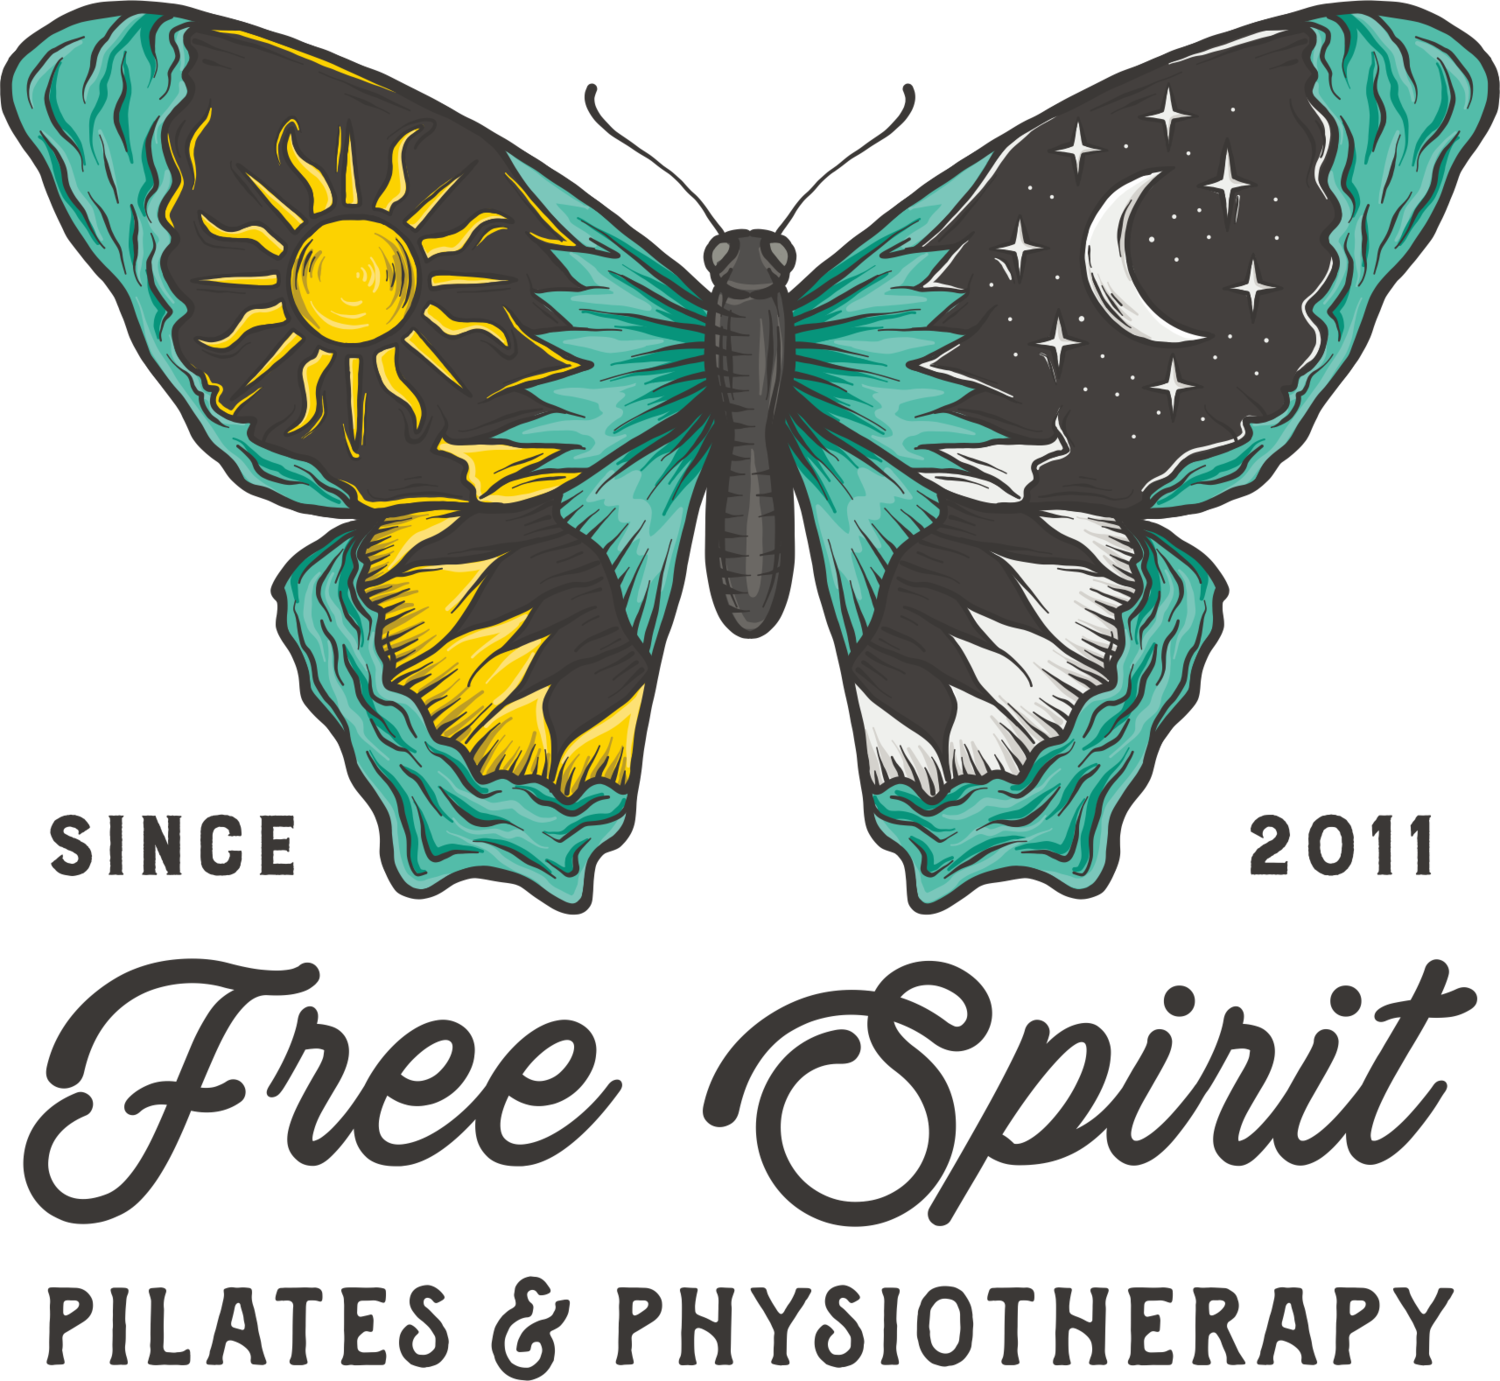 Free Spirit Pilates